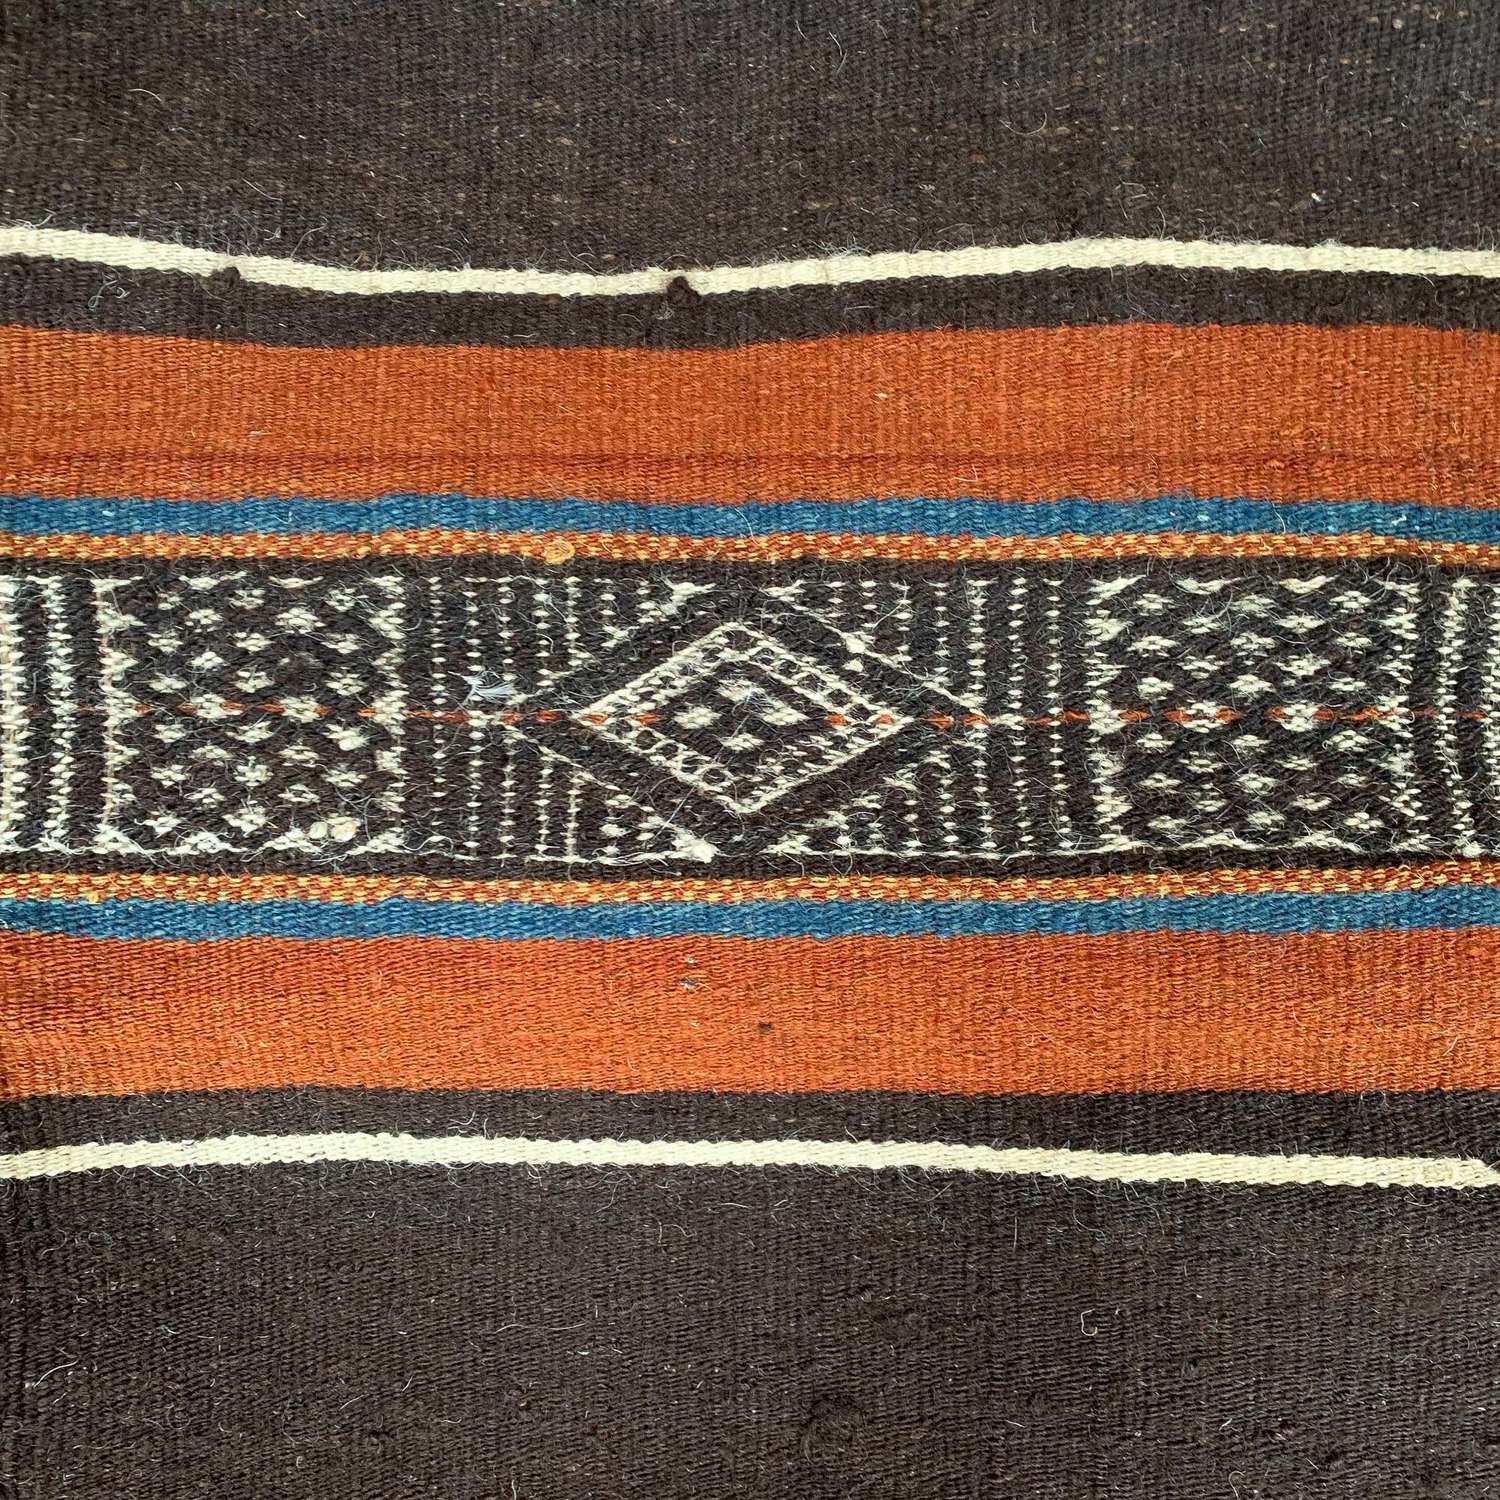 Vintage Mali blanket